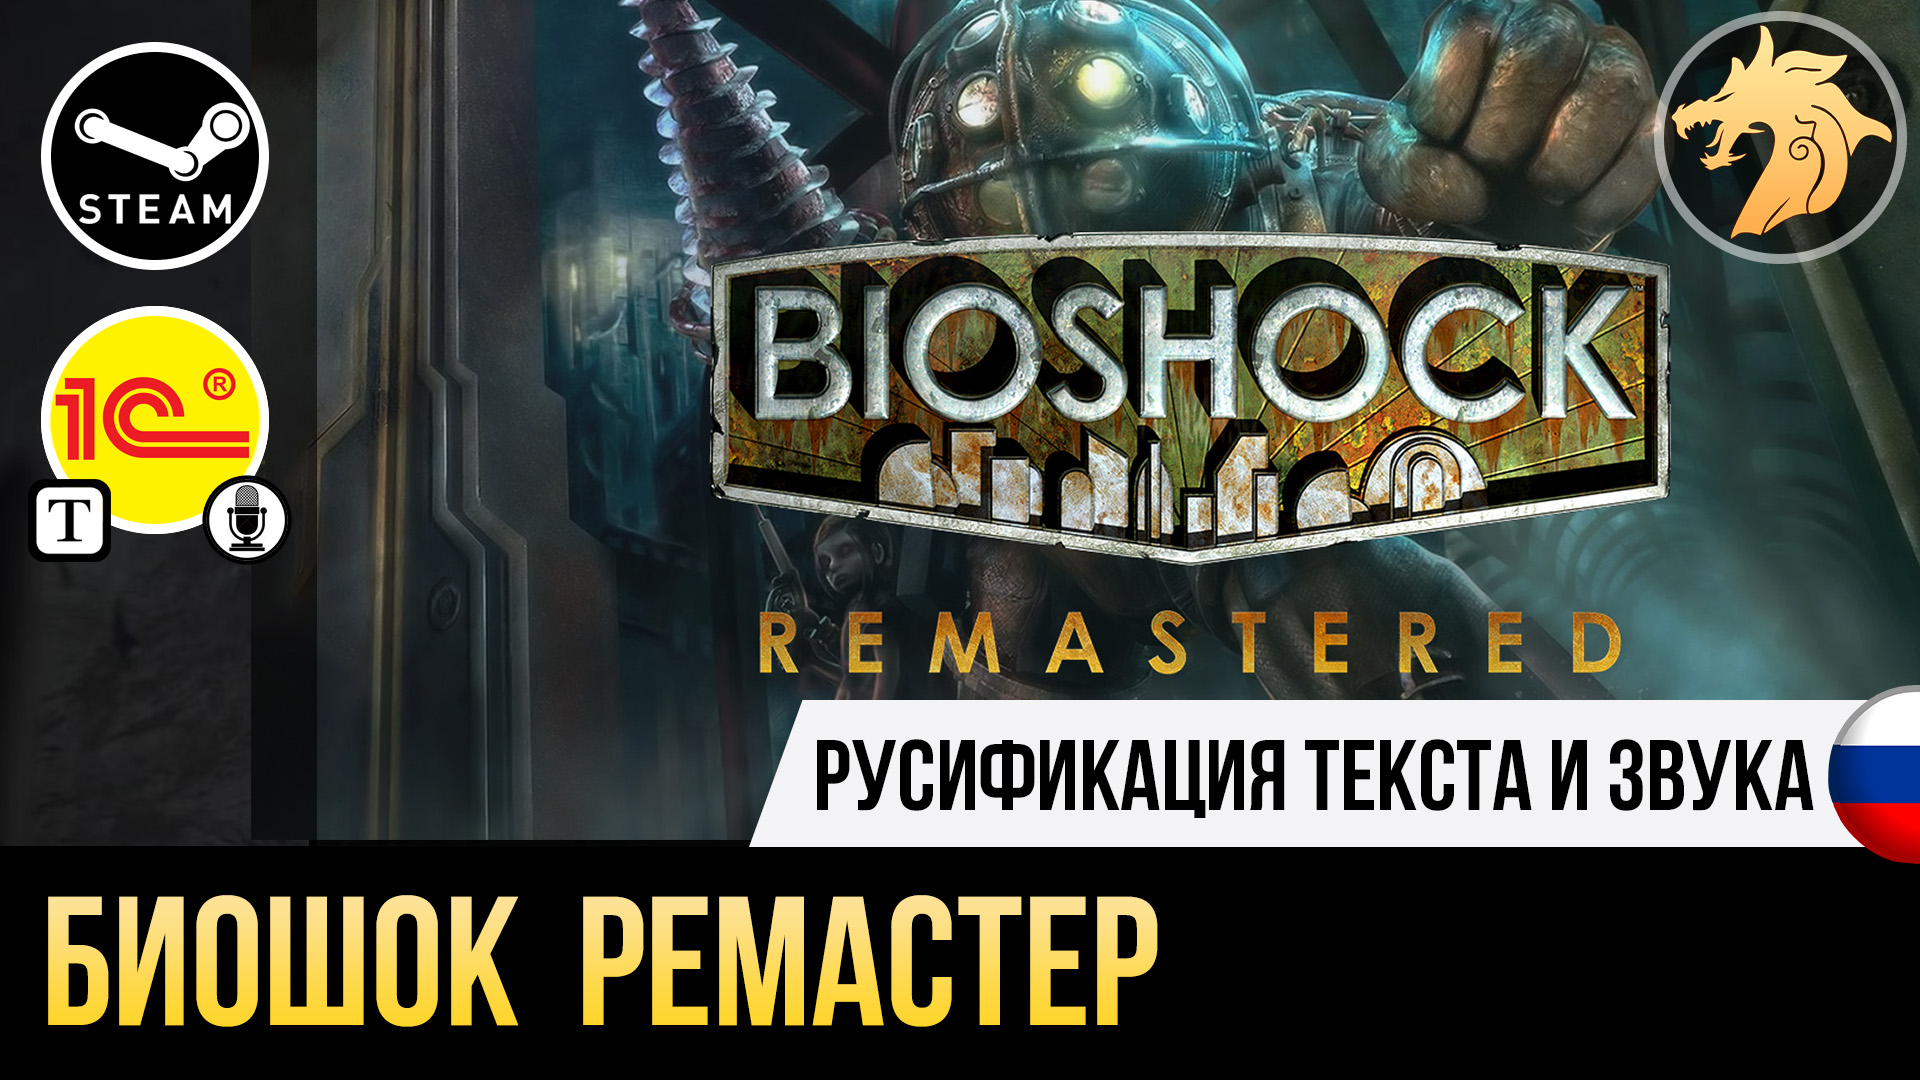 Bioshock remastered русификатор звука. Bioshock Remastered купить.